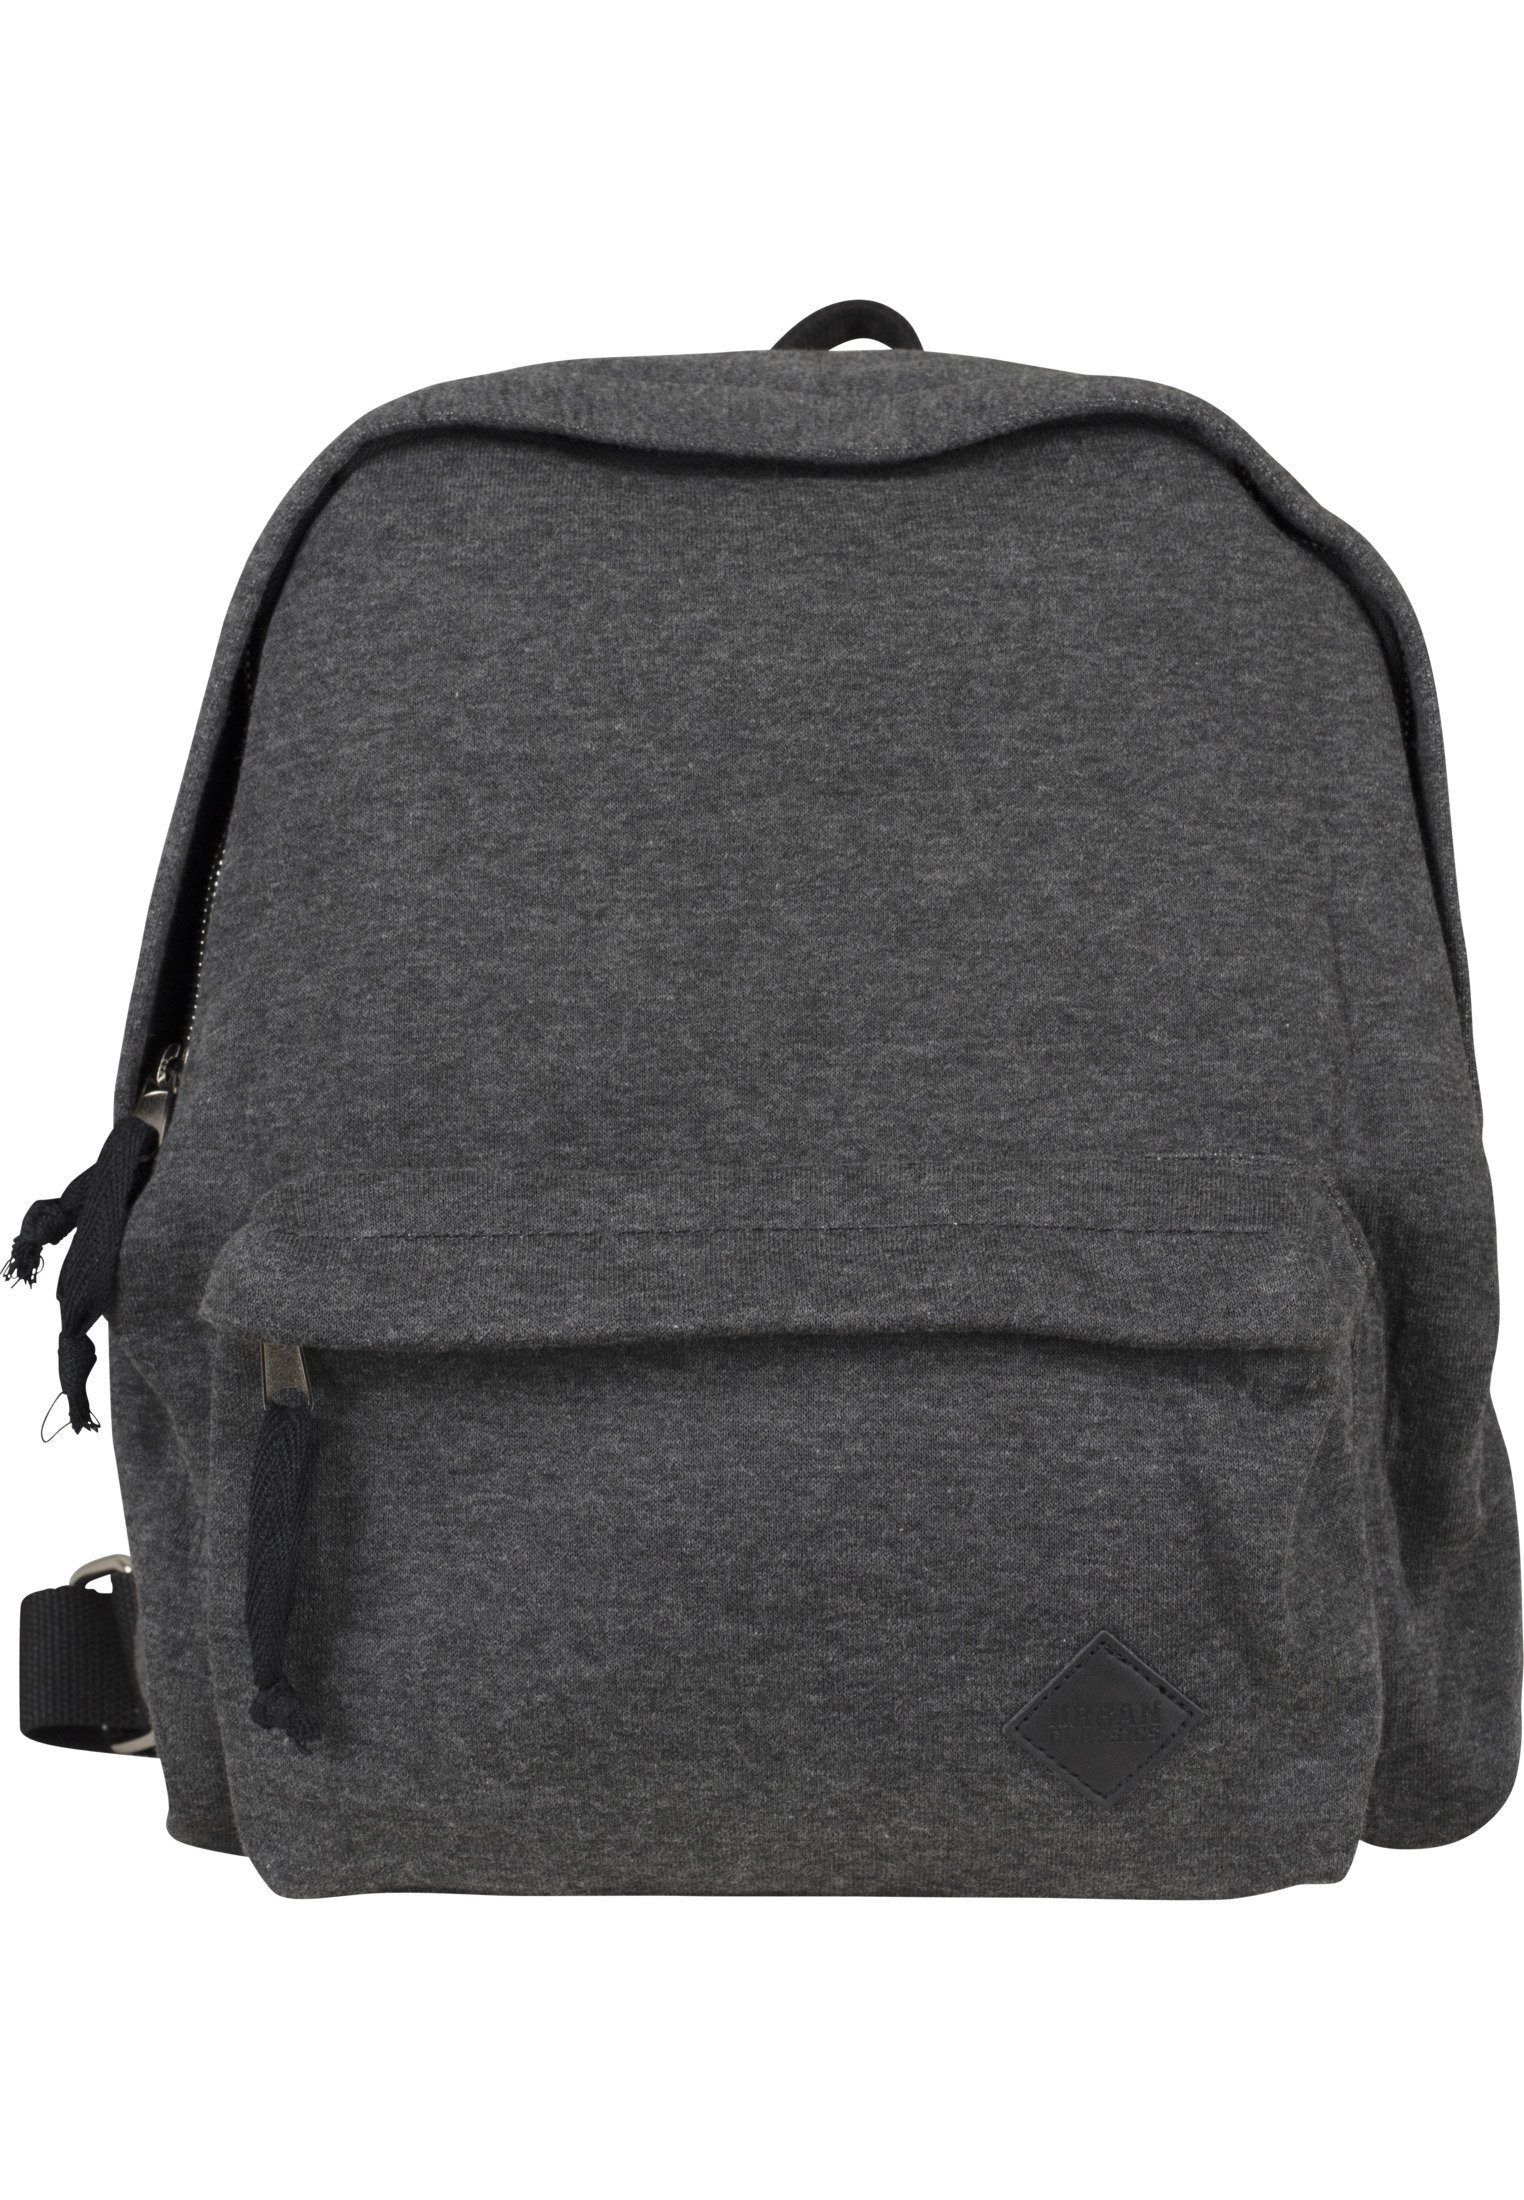 Sweat Unisex CLASSICS charcoal/black Rucksack Backpack URBAN